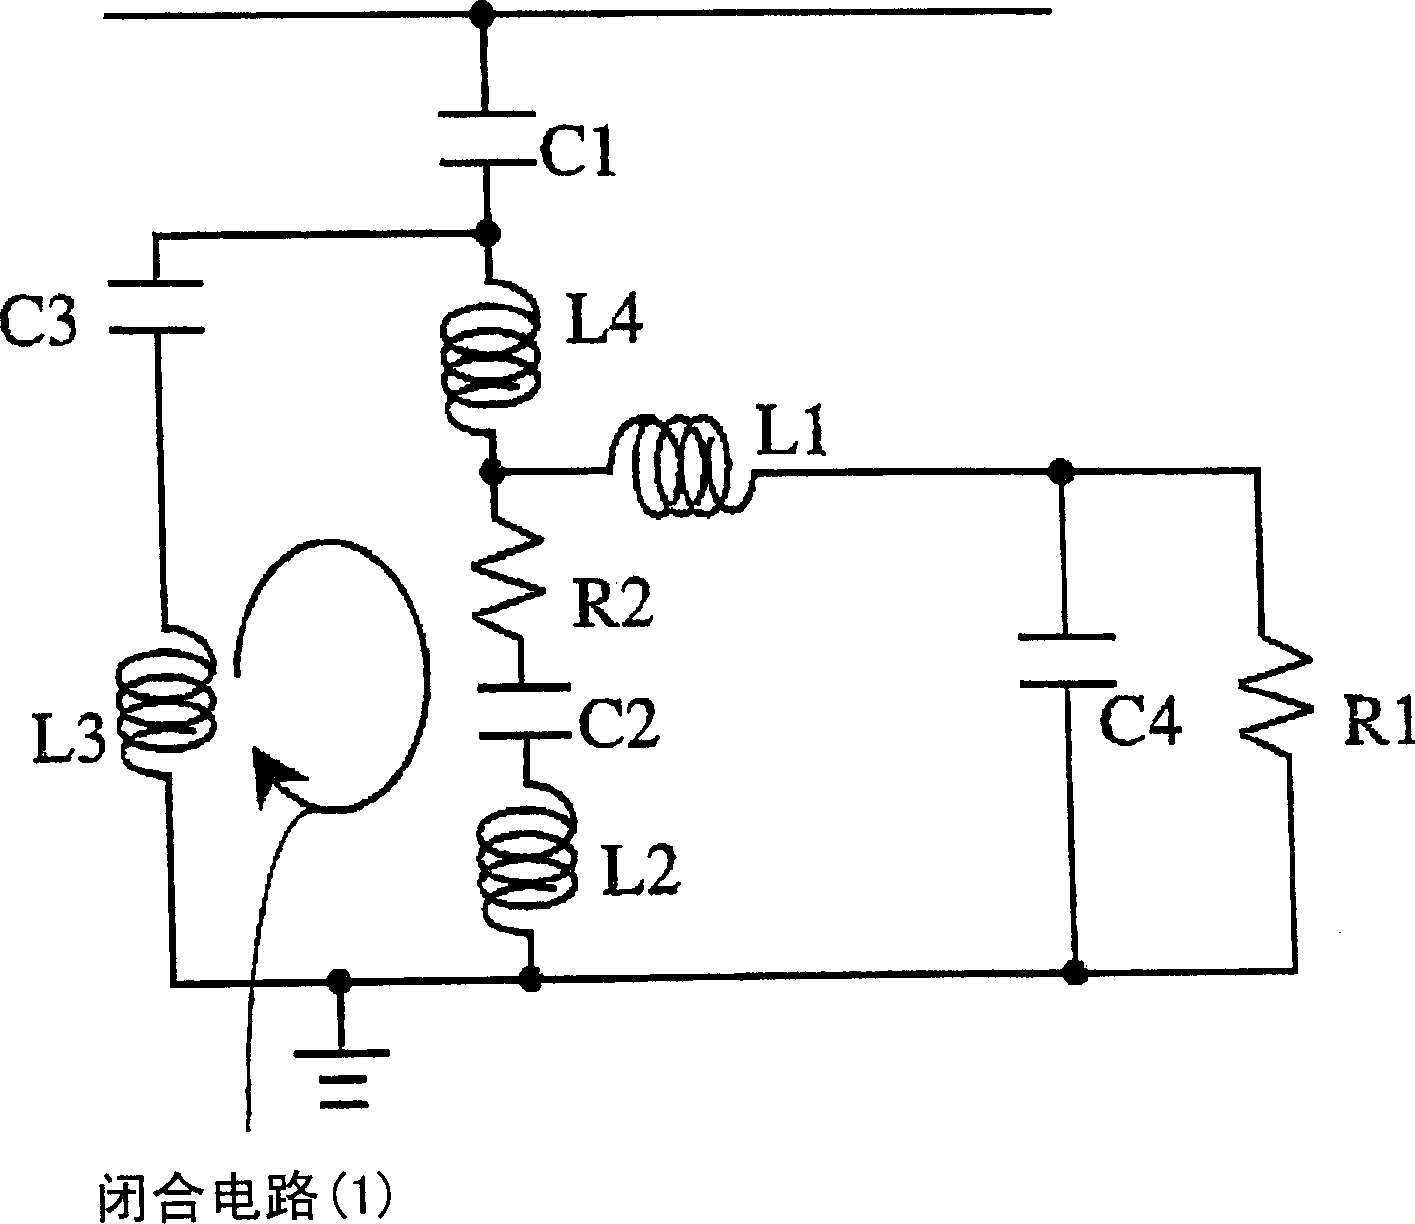 Voltage check device